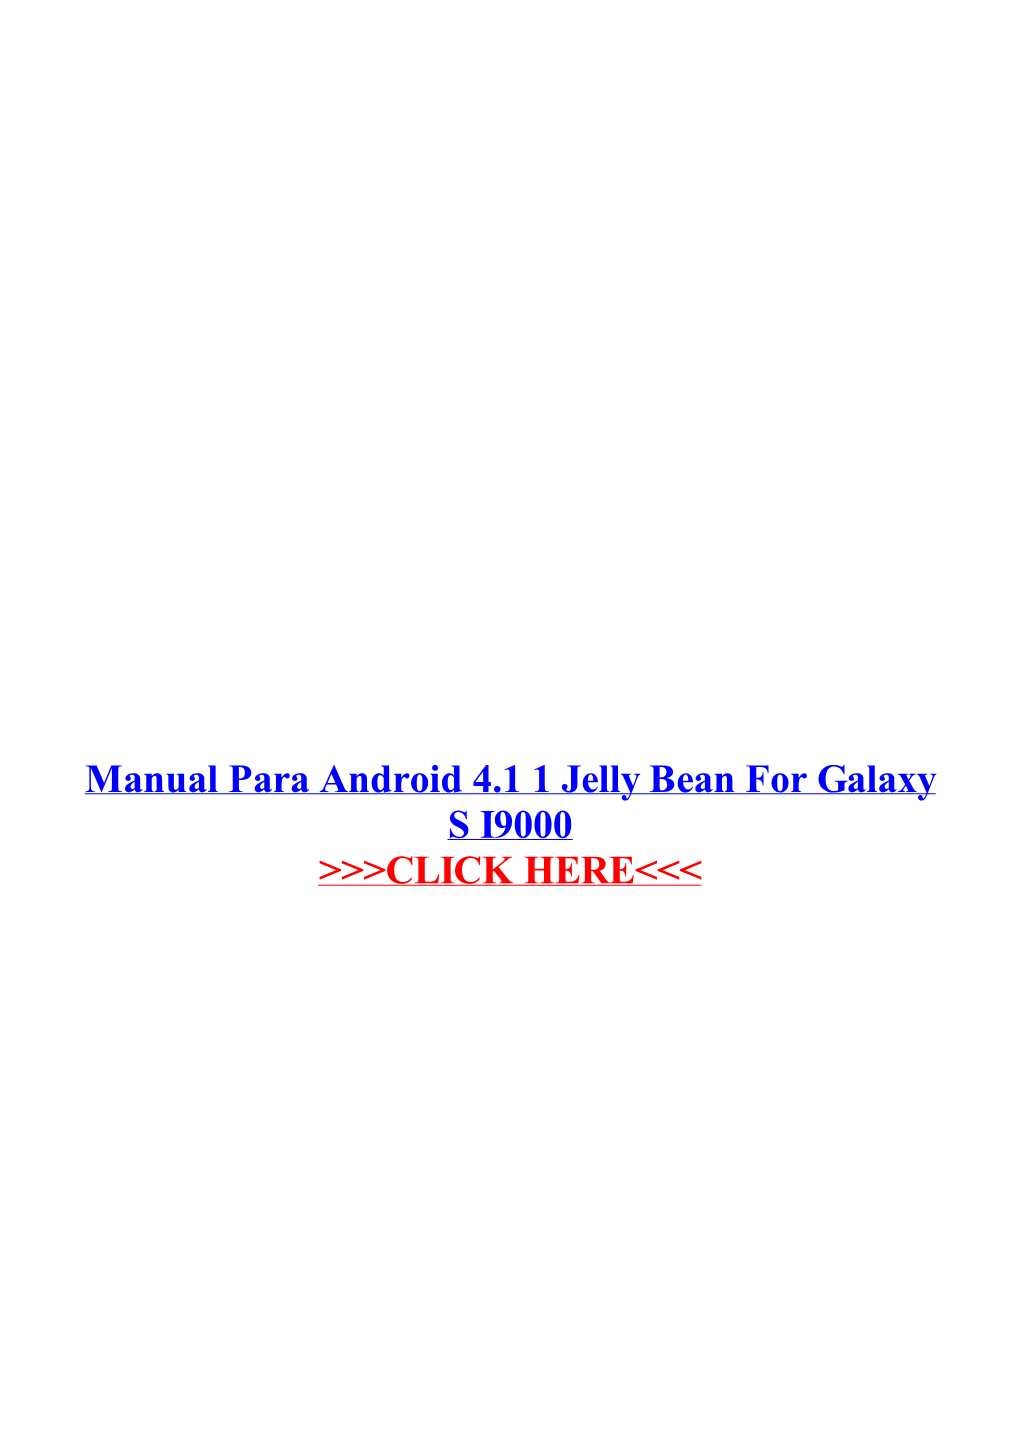 Manual Para Android 4.1 1 Jelly Bean for Galaxy S I9000